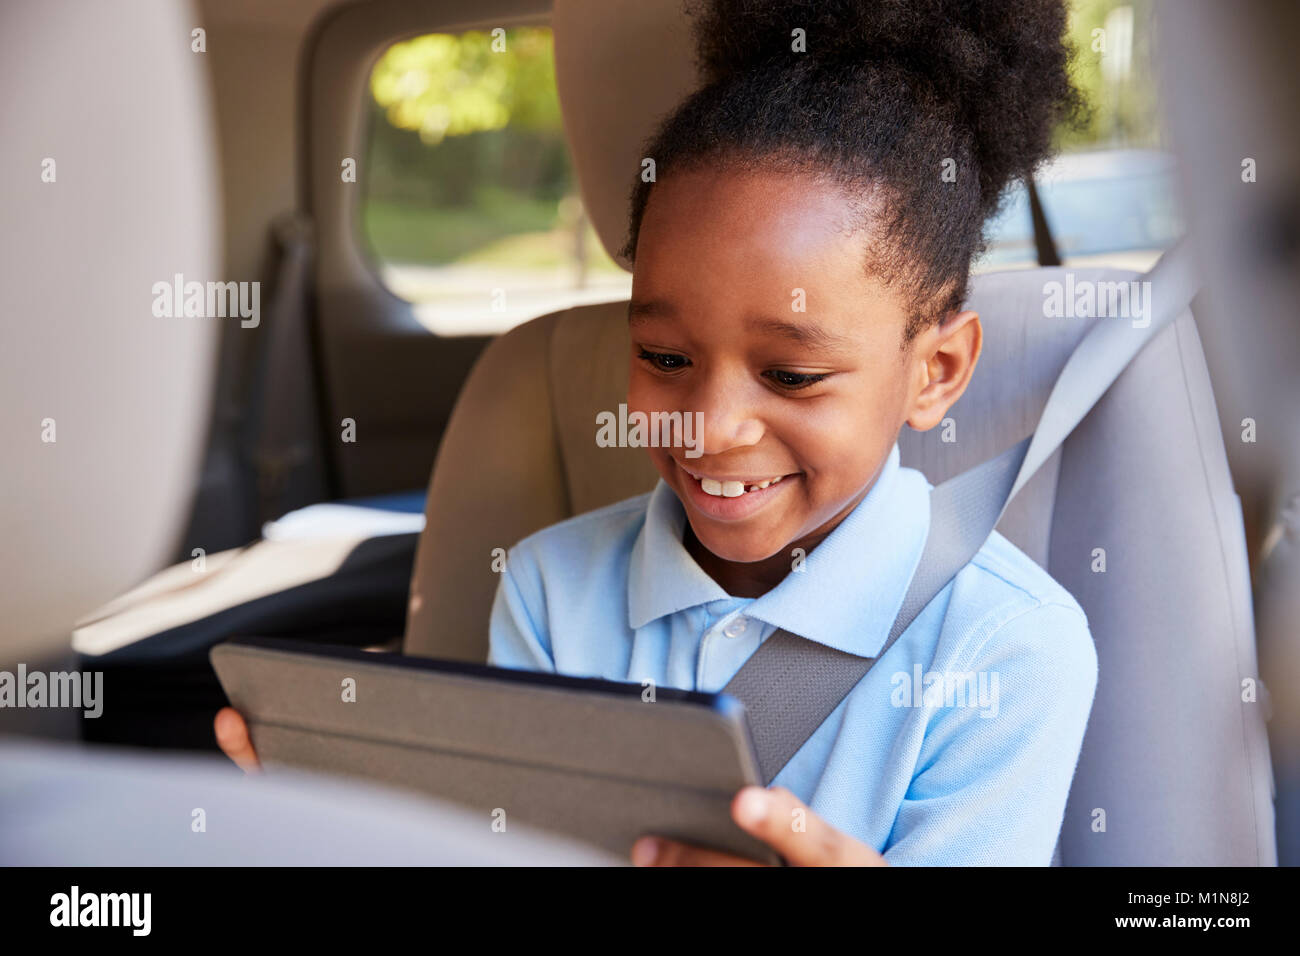 Boy Using Digital Tablet On Car Journey Stock Photo